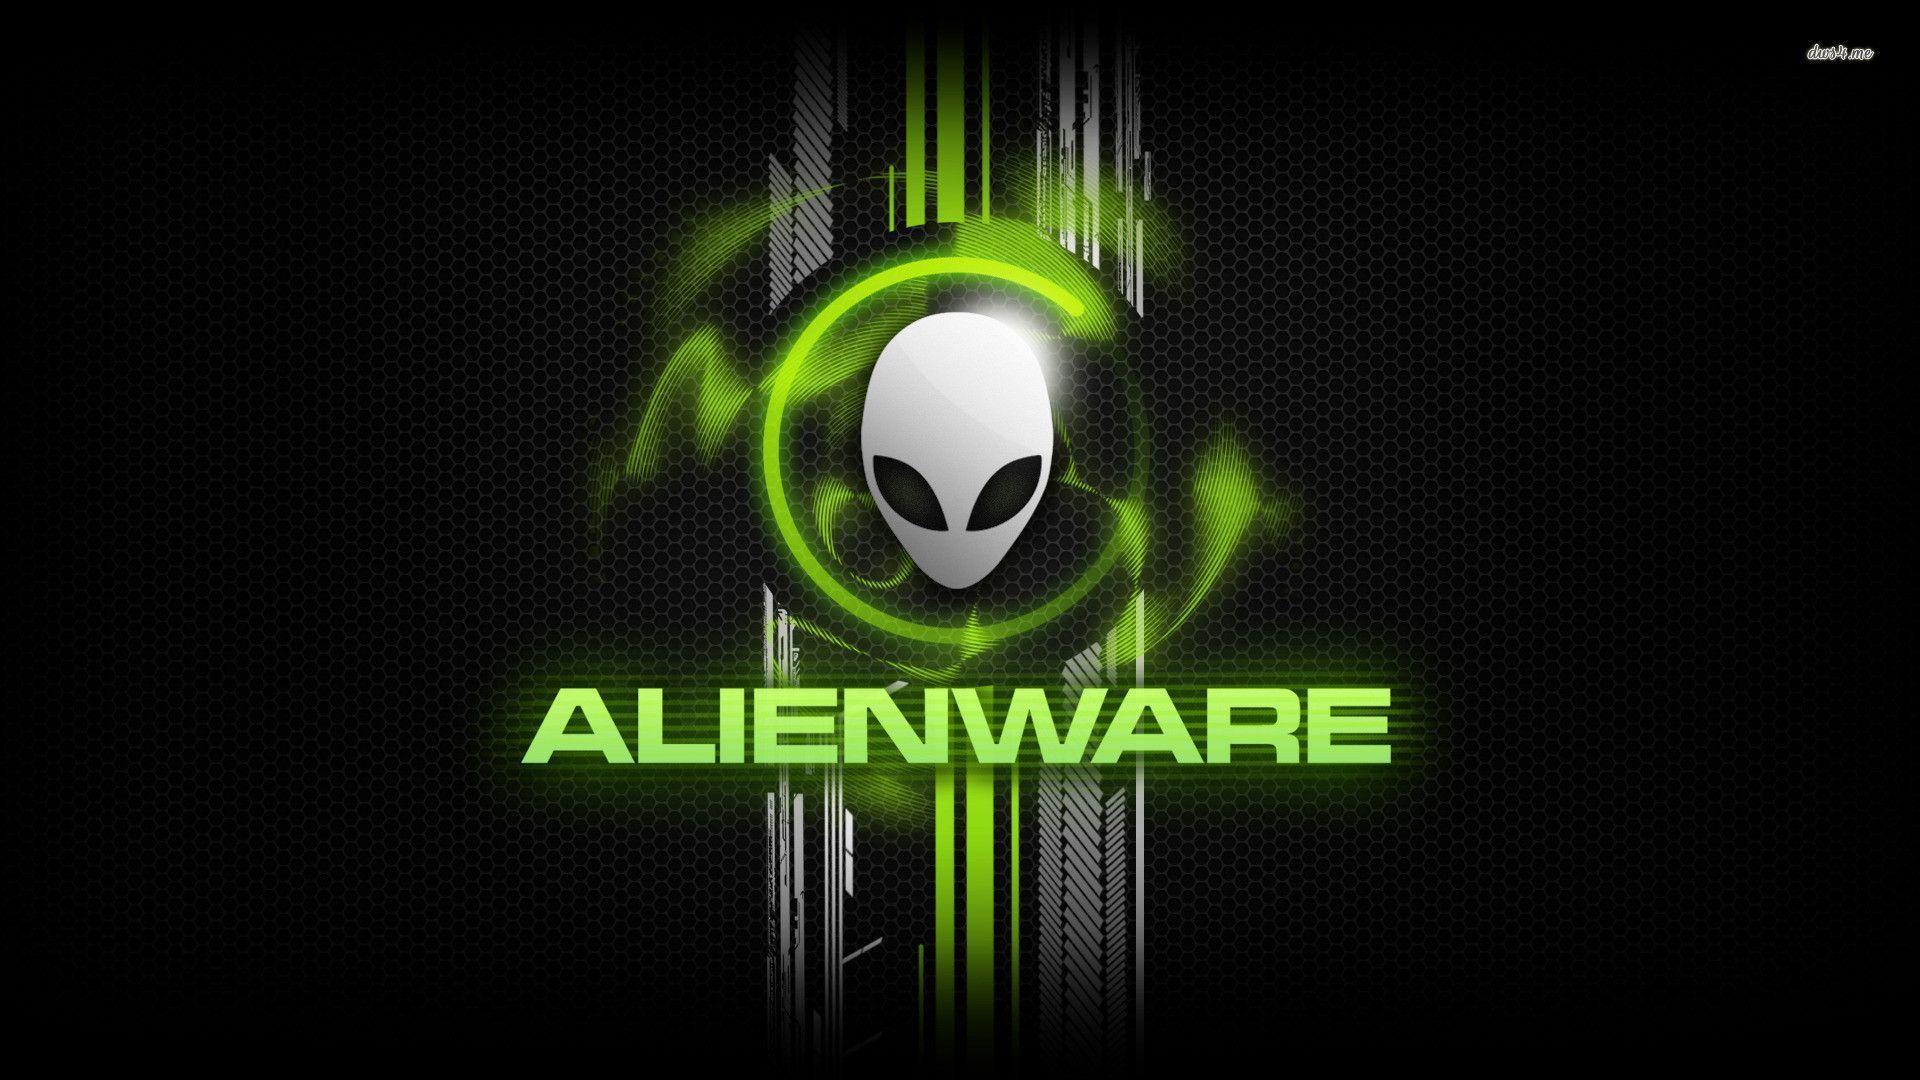 Alienware Wallpaper 44 179185 Image HD Wallpaper. Wallfoy.com